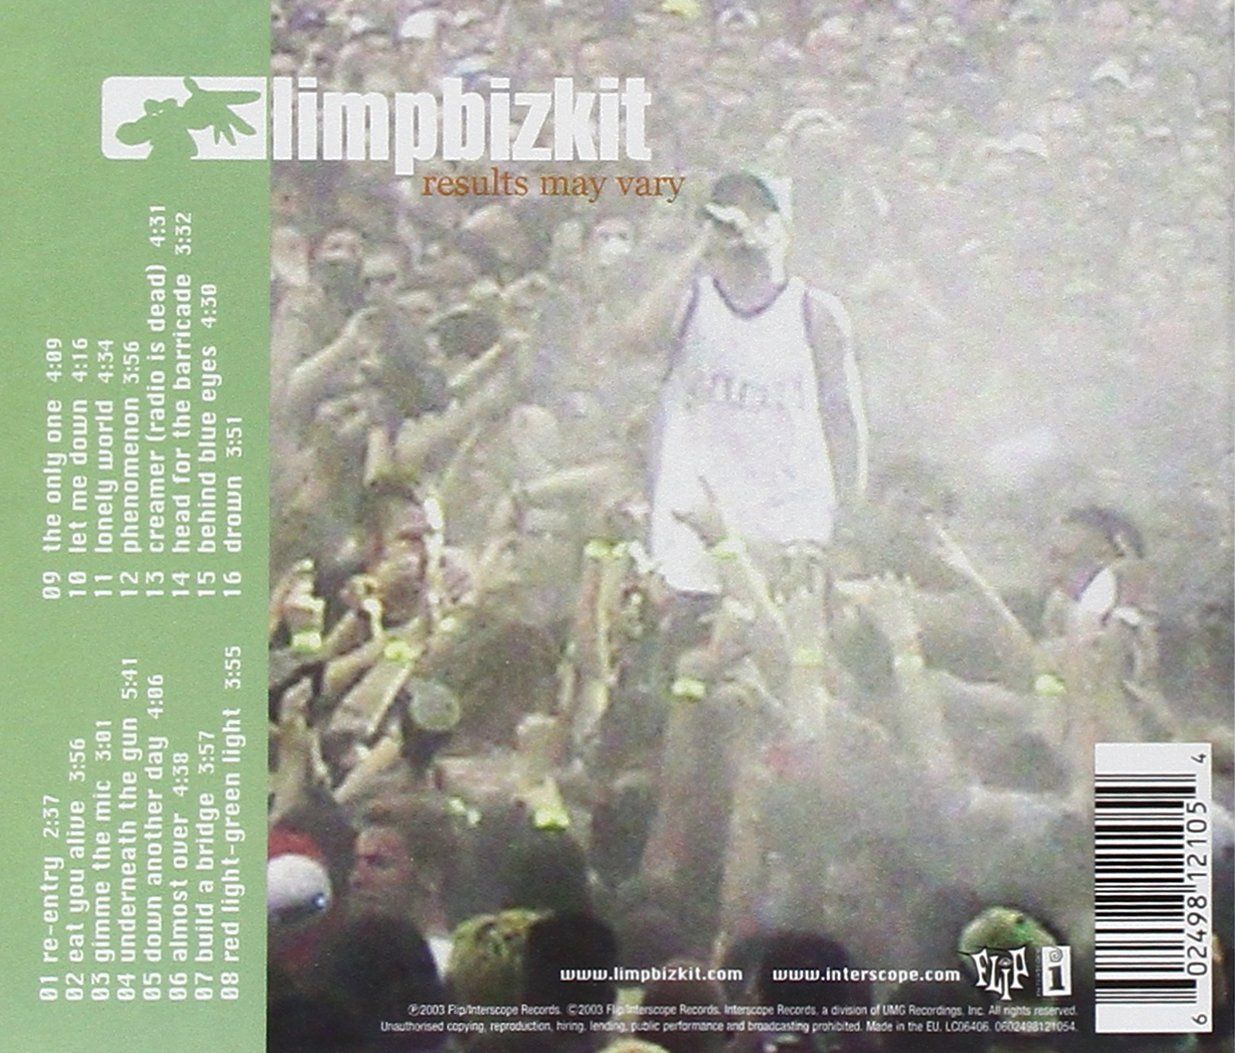 Limp Bizkit - Results May Vary - CD - New